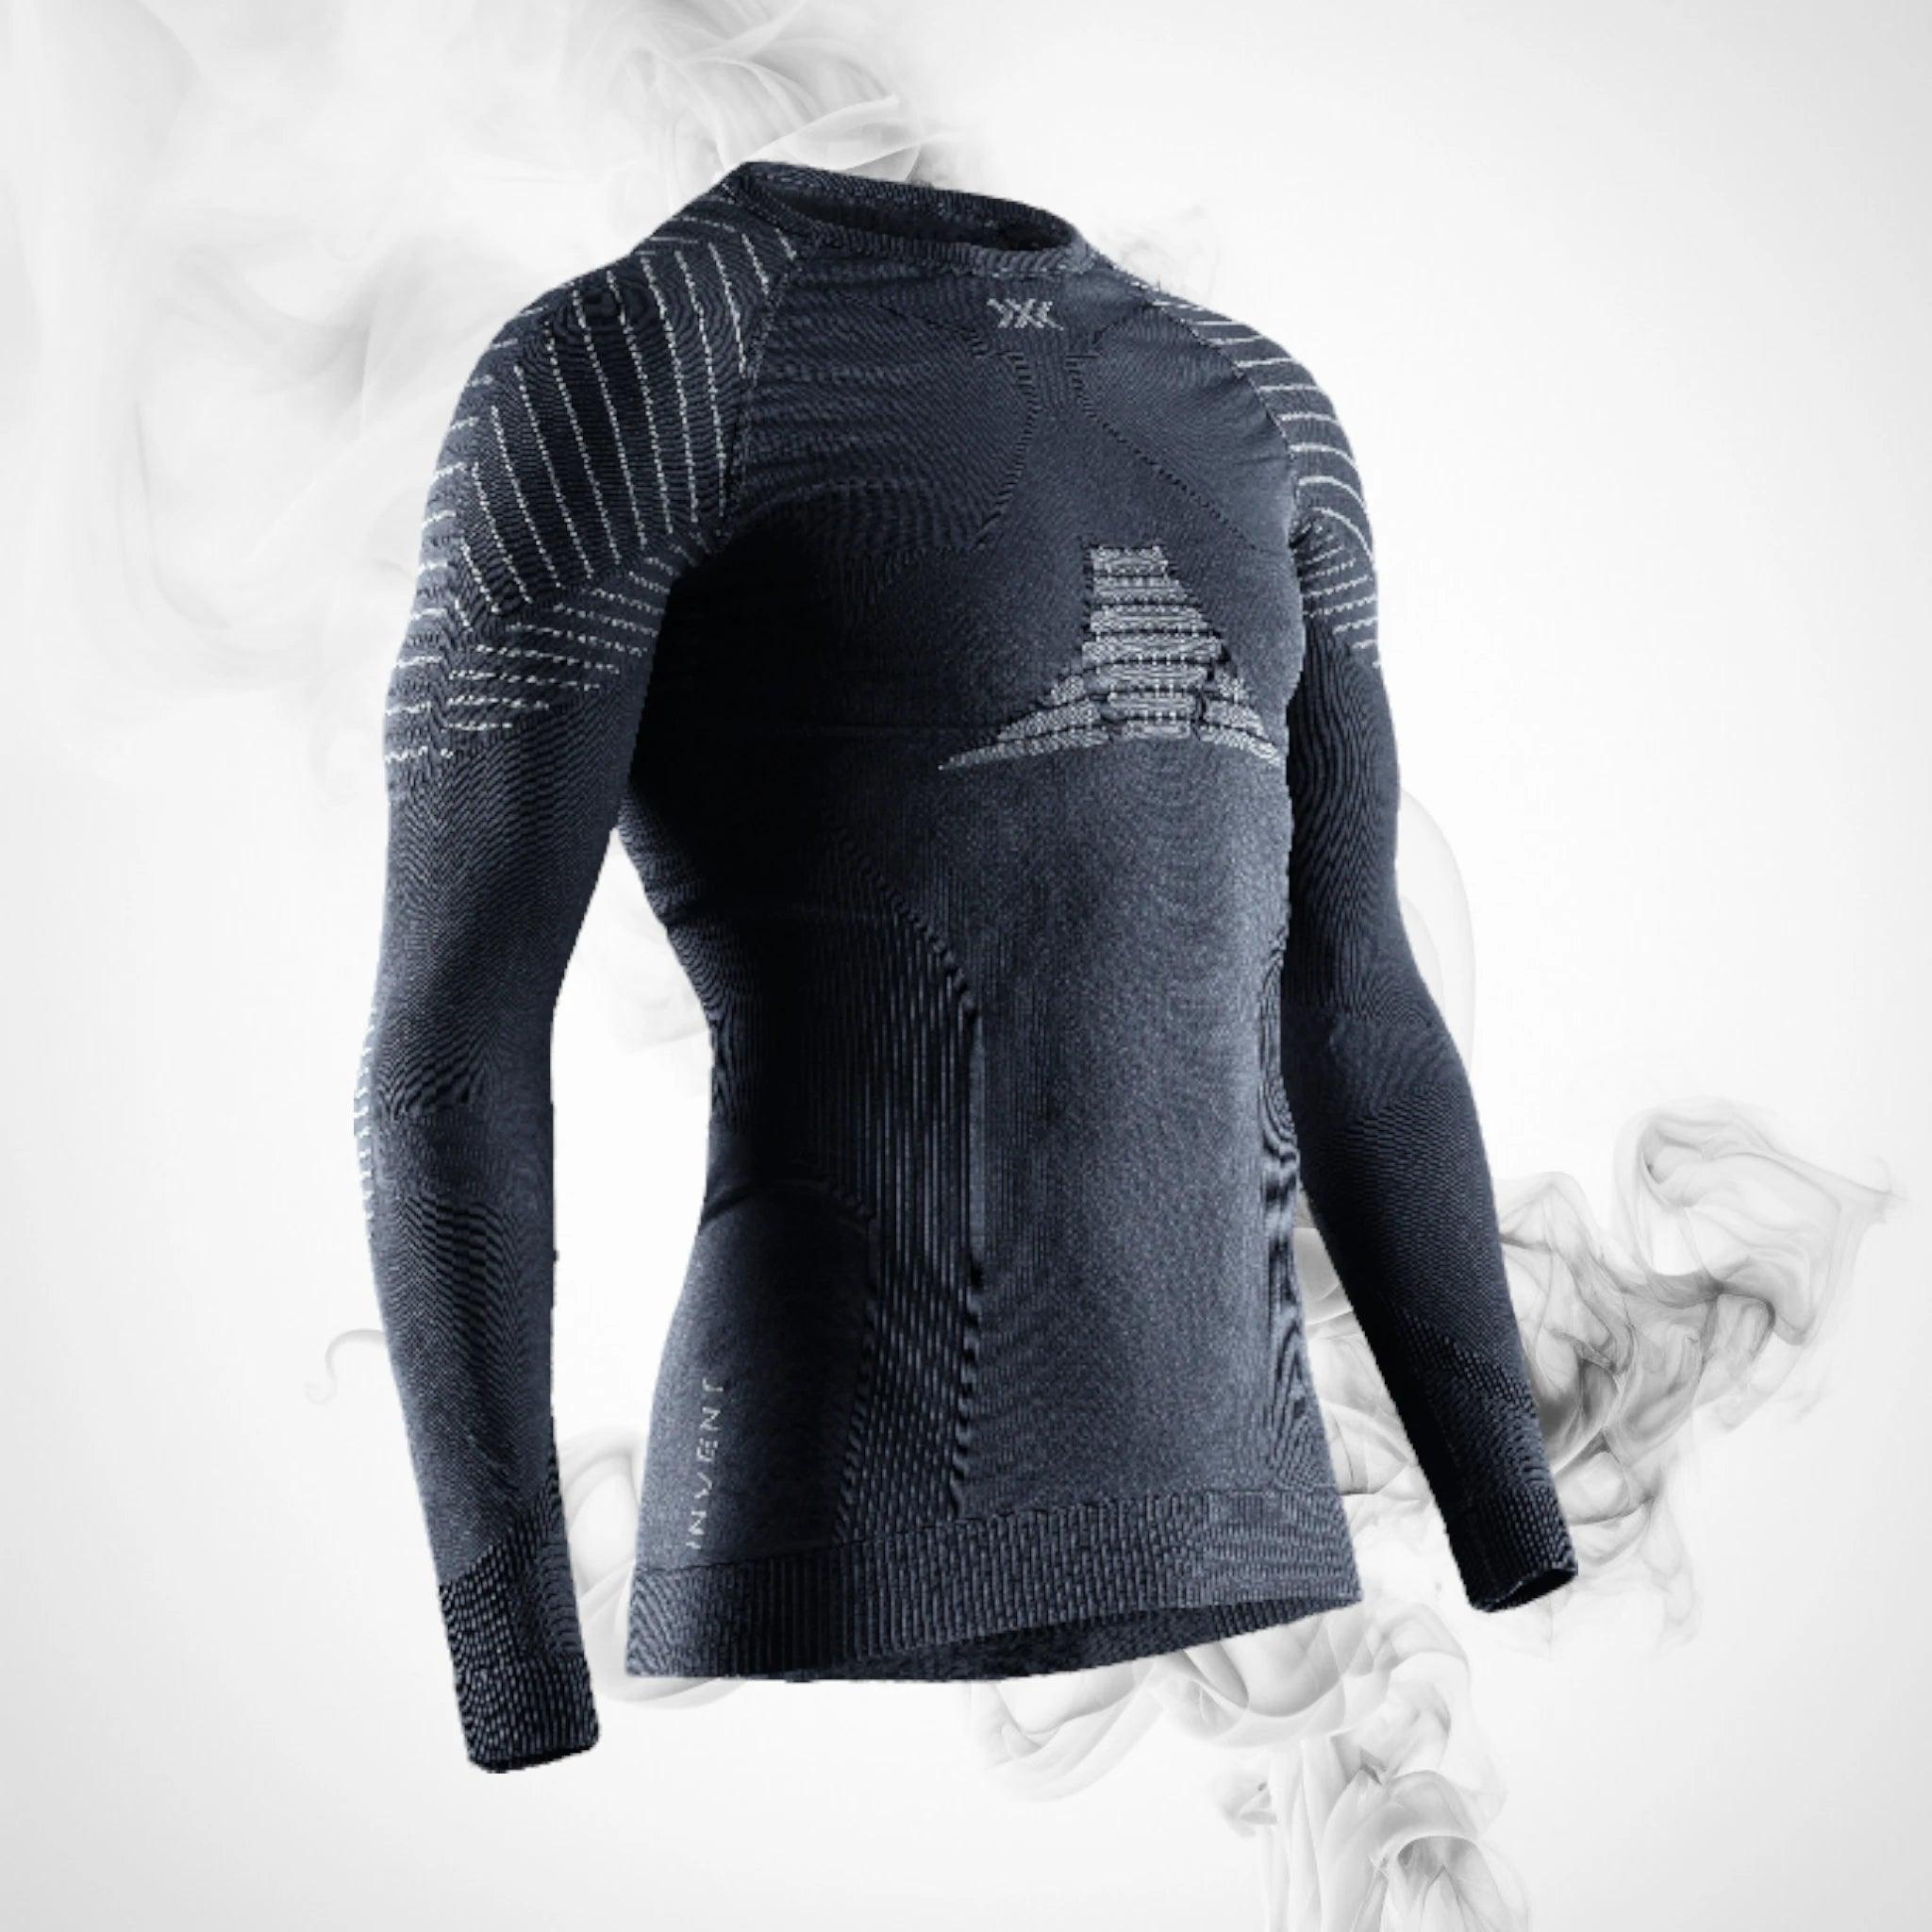 Ski Thermal underwear X-bionic Invent 4.0 Shirt LG SL Men Anthracite/Black - 2023/24 - Dash Racegear Dash Racegear, Thermal Wear underwear